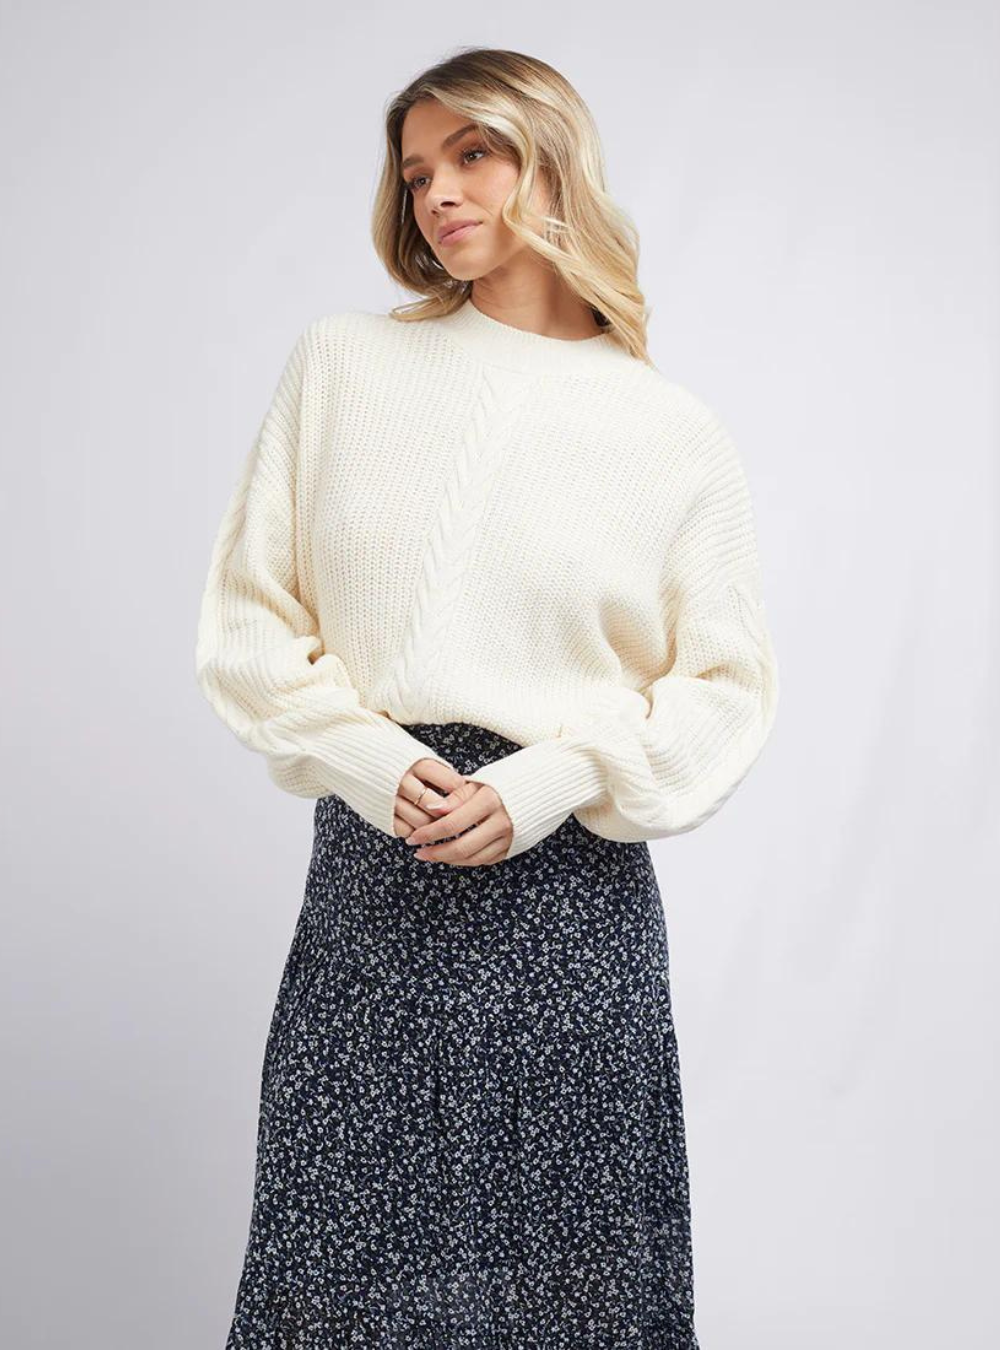 Rumi Knit Sweater - Vintage White